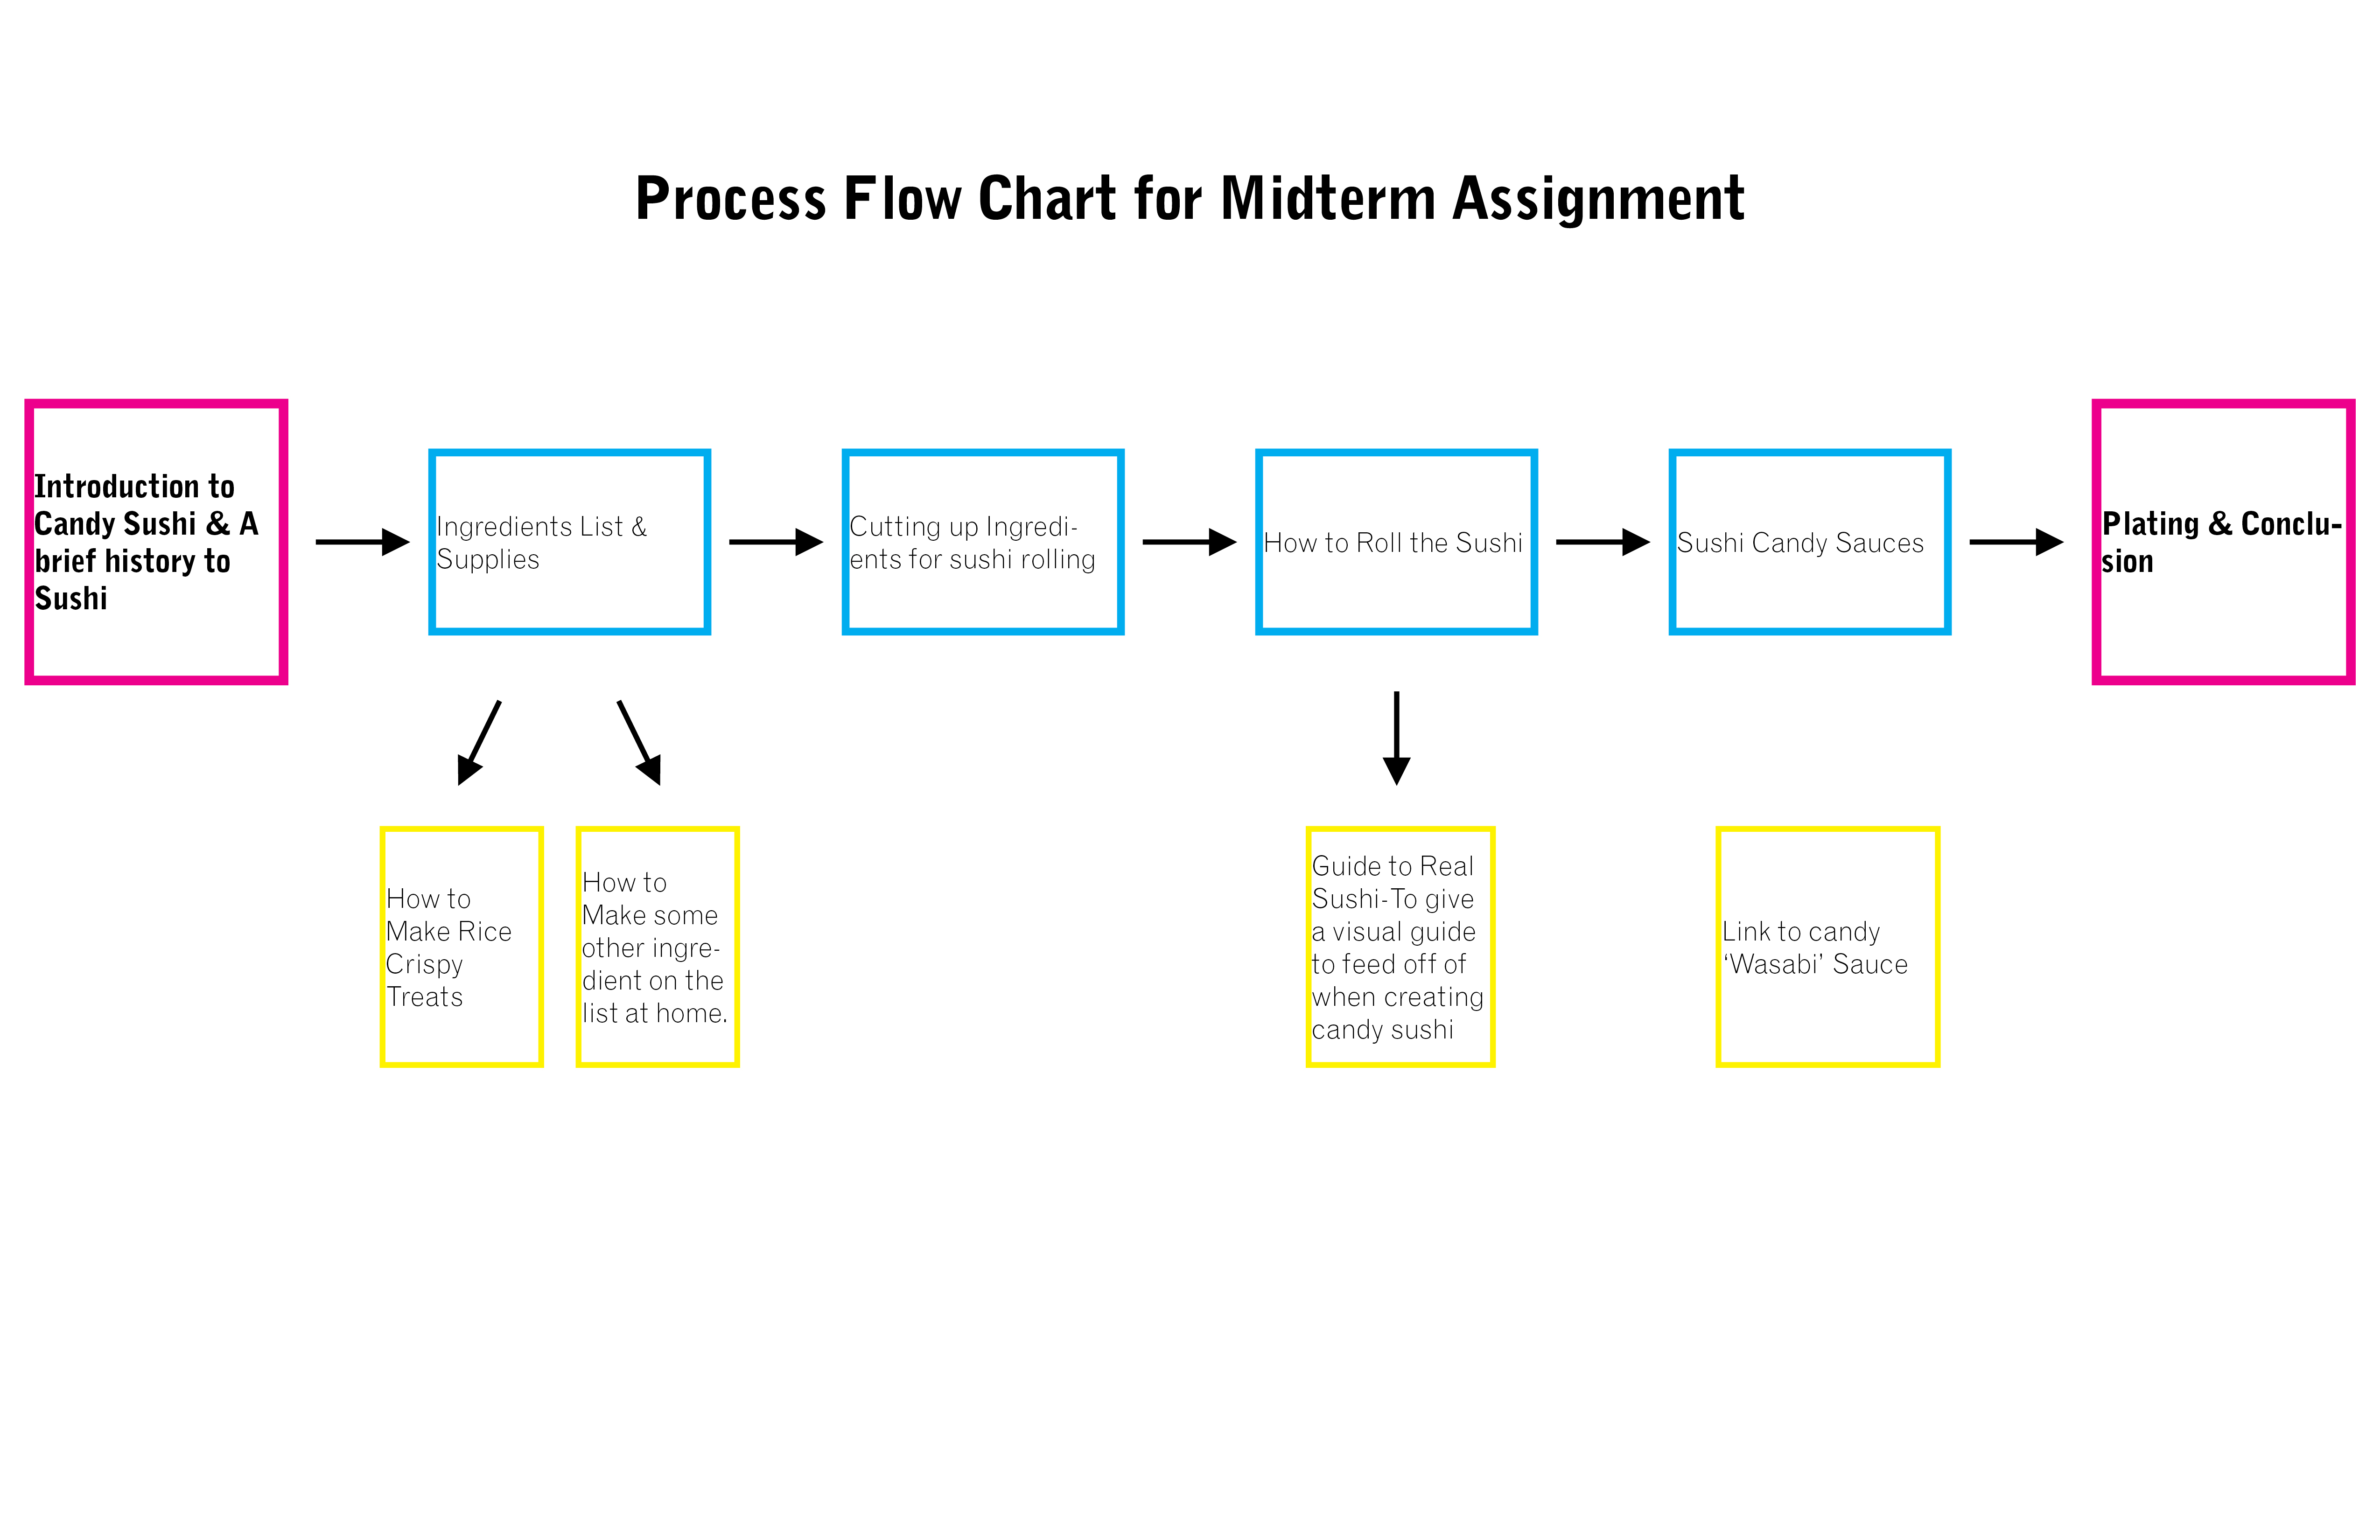 plating process flow chart